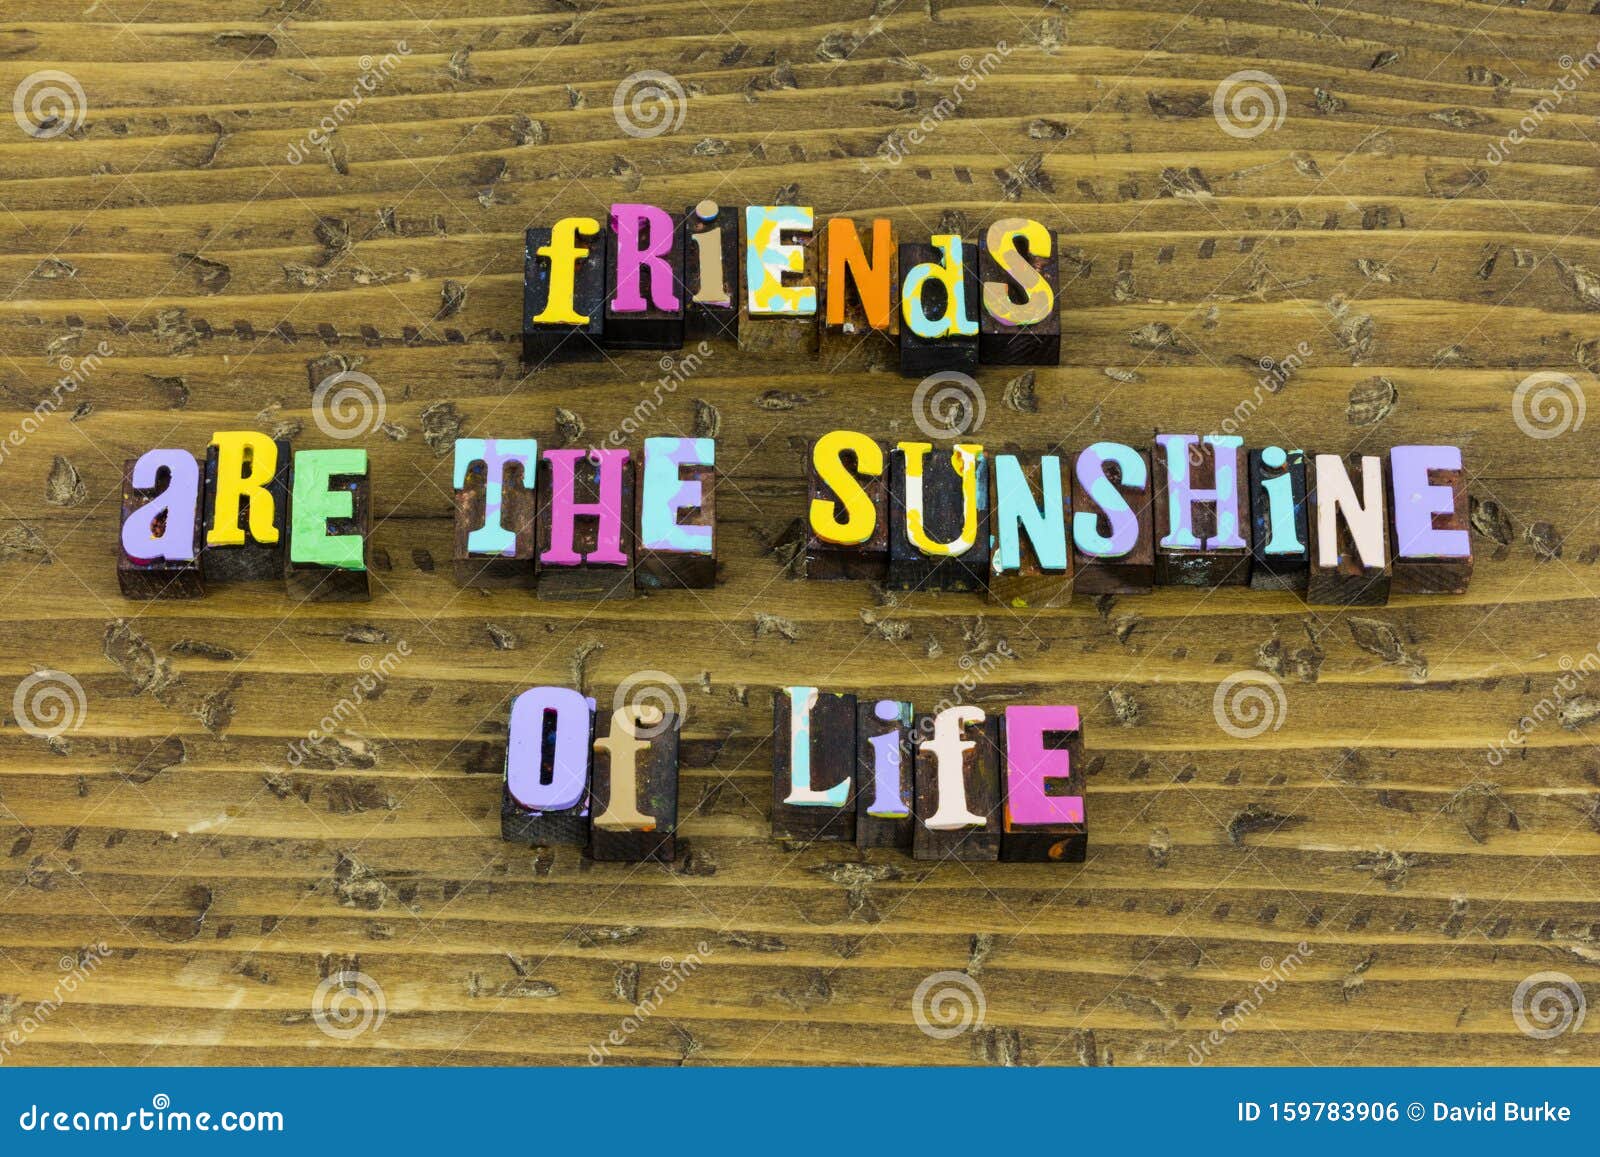 friends sunshine life love friendship enjoy friend kindness